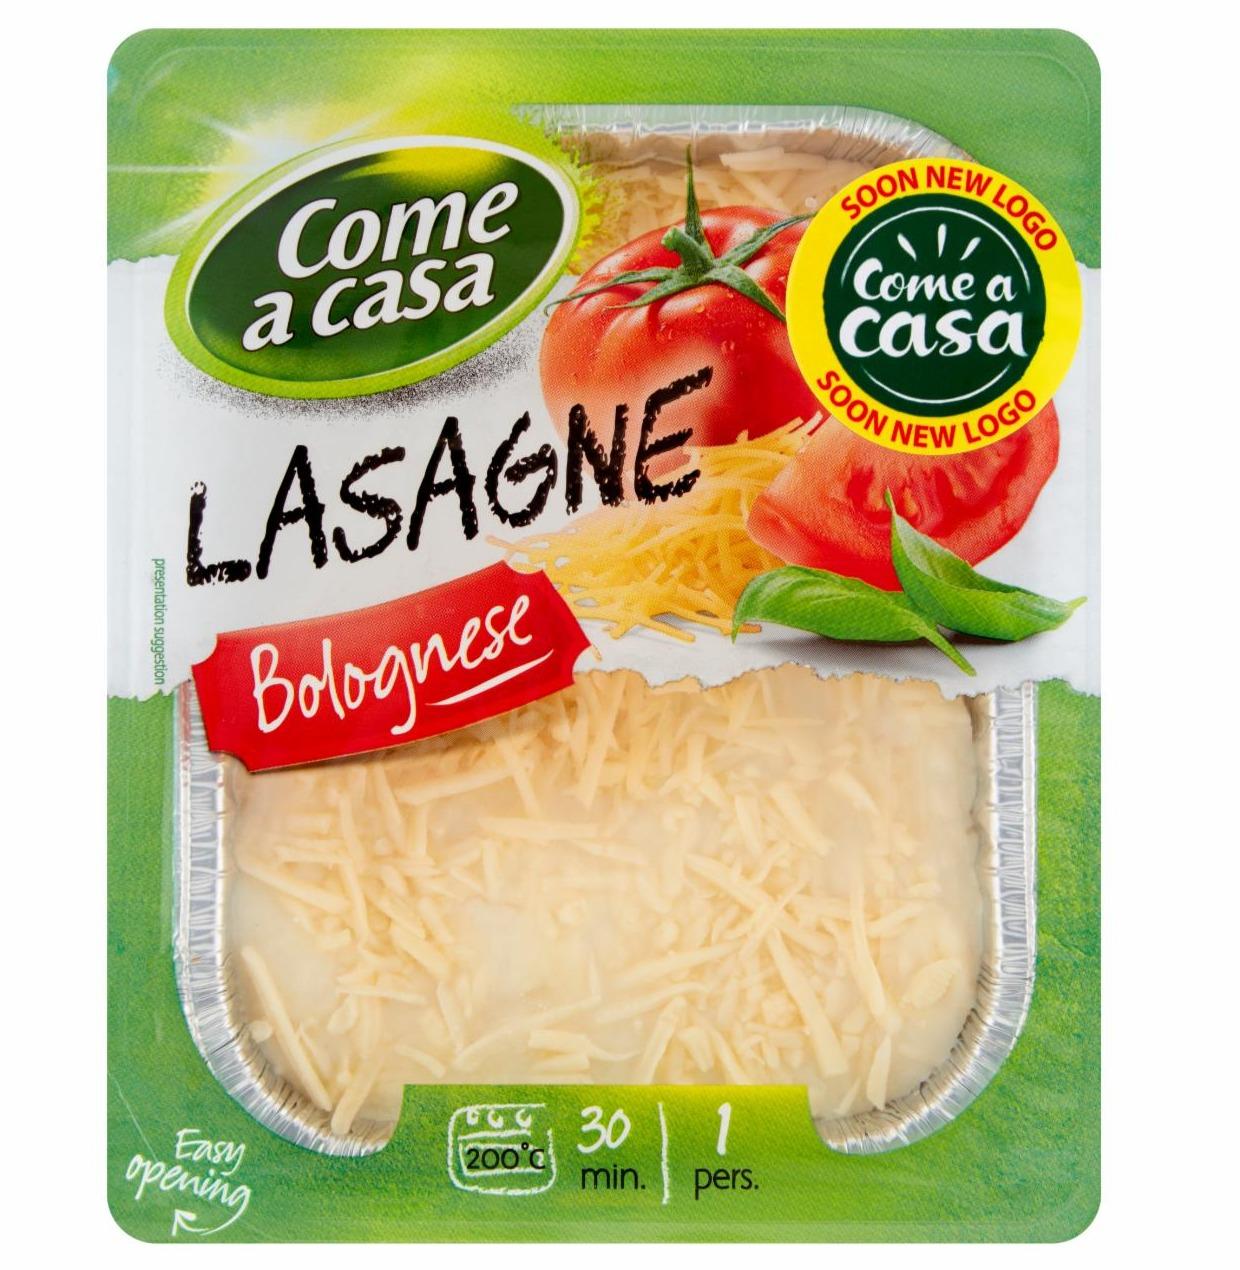 Zdjęcia - Lasagne Bolognese Come a casa